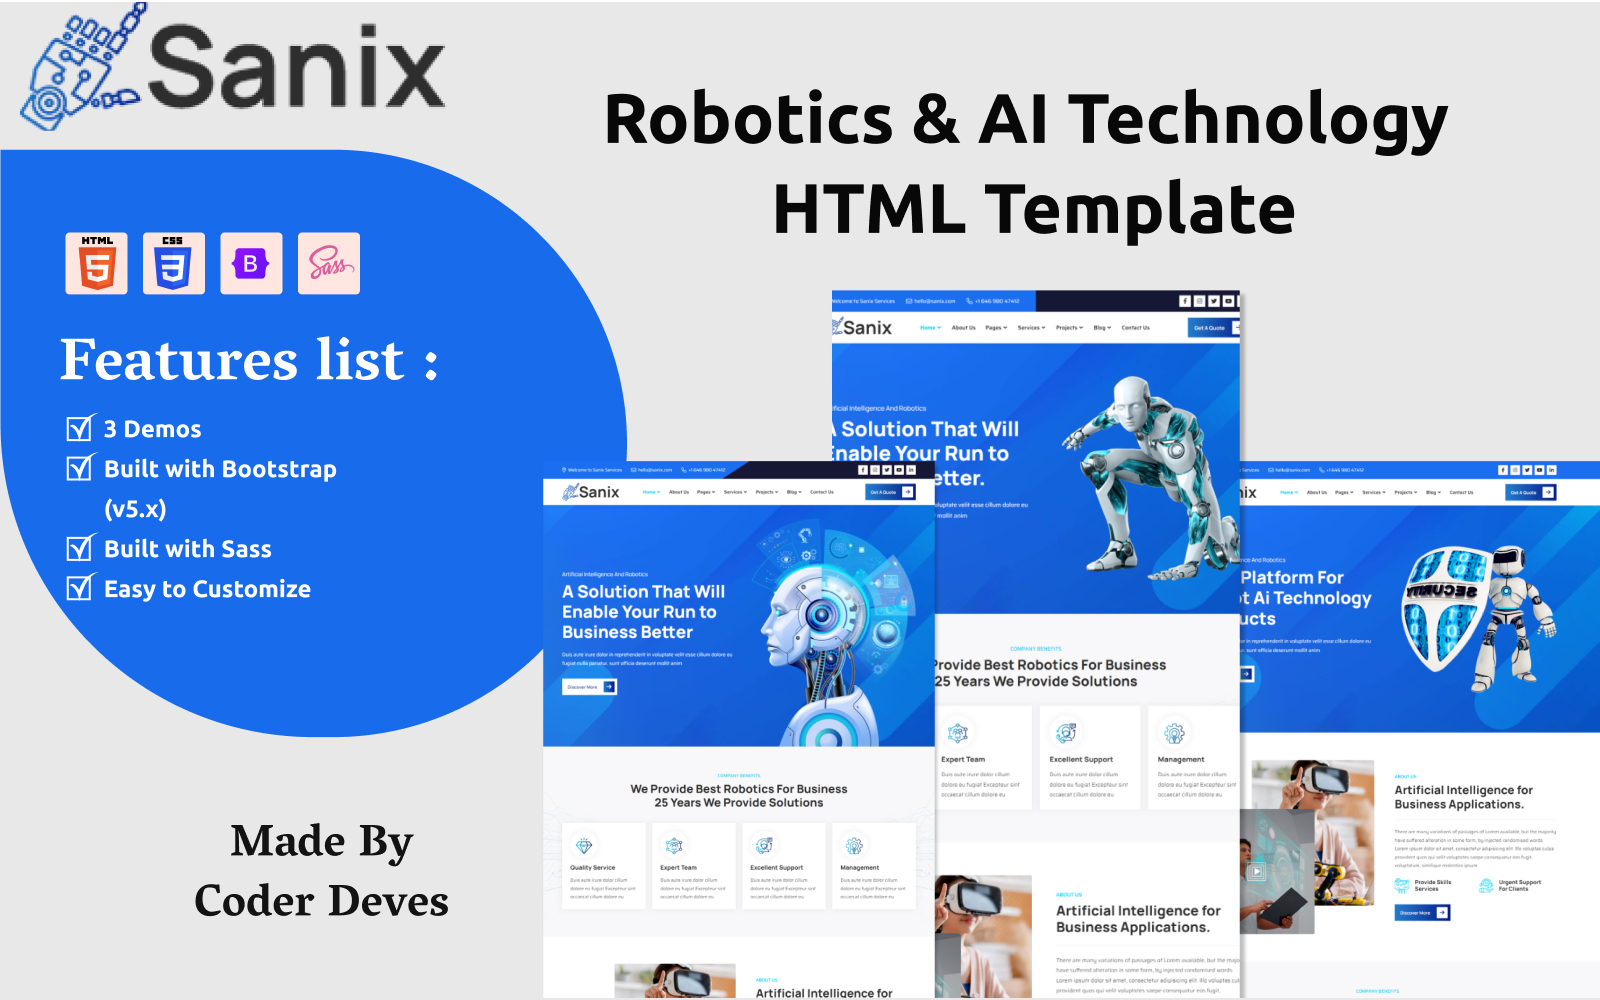 Sanix - Robotics & AI Technology HTML Template + RTL Supported